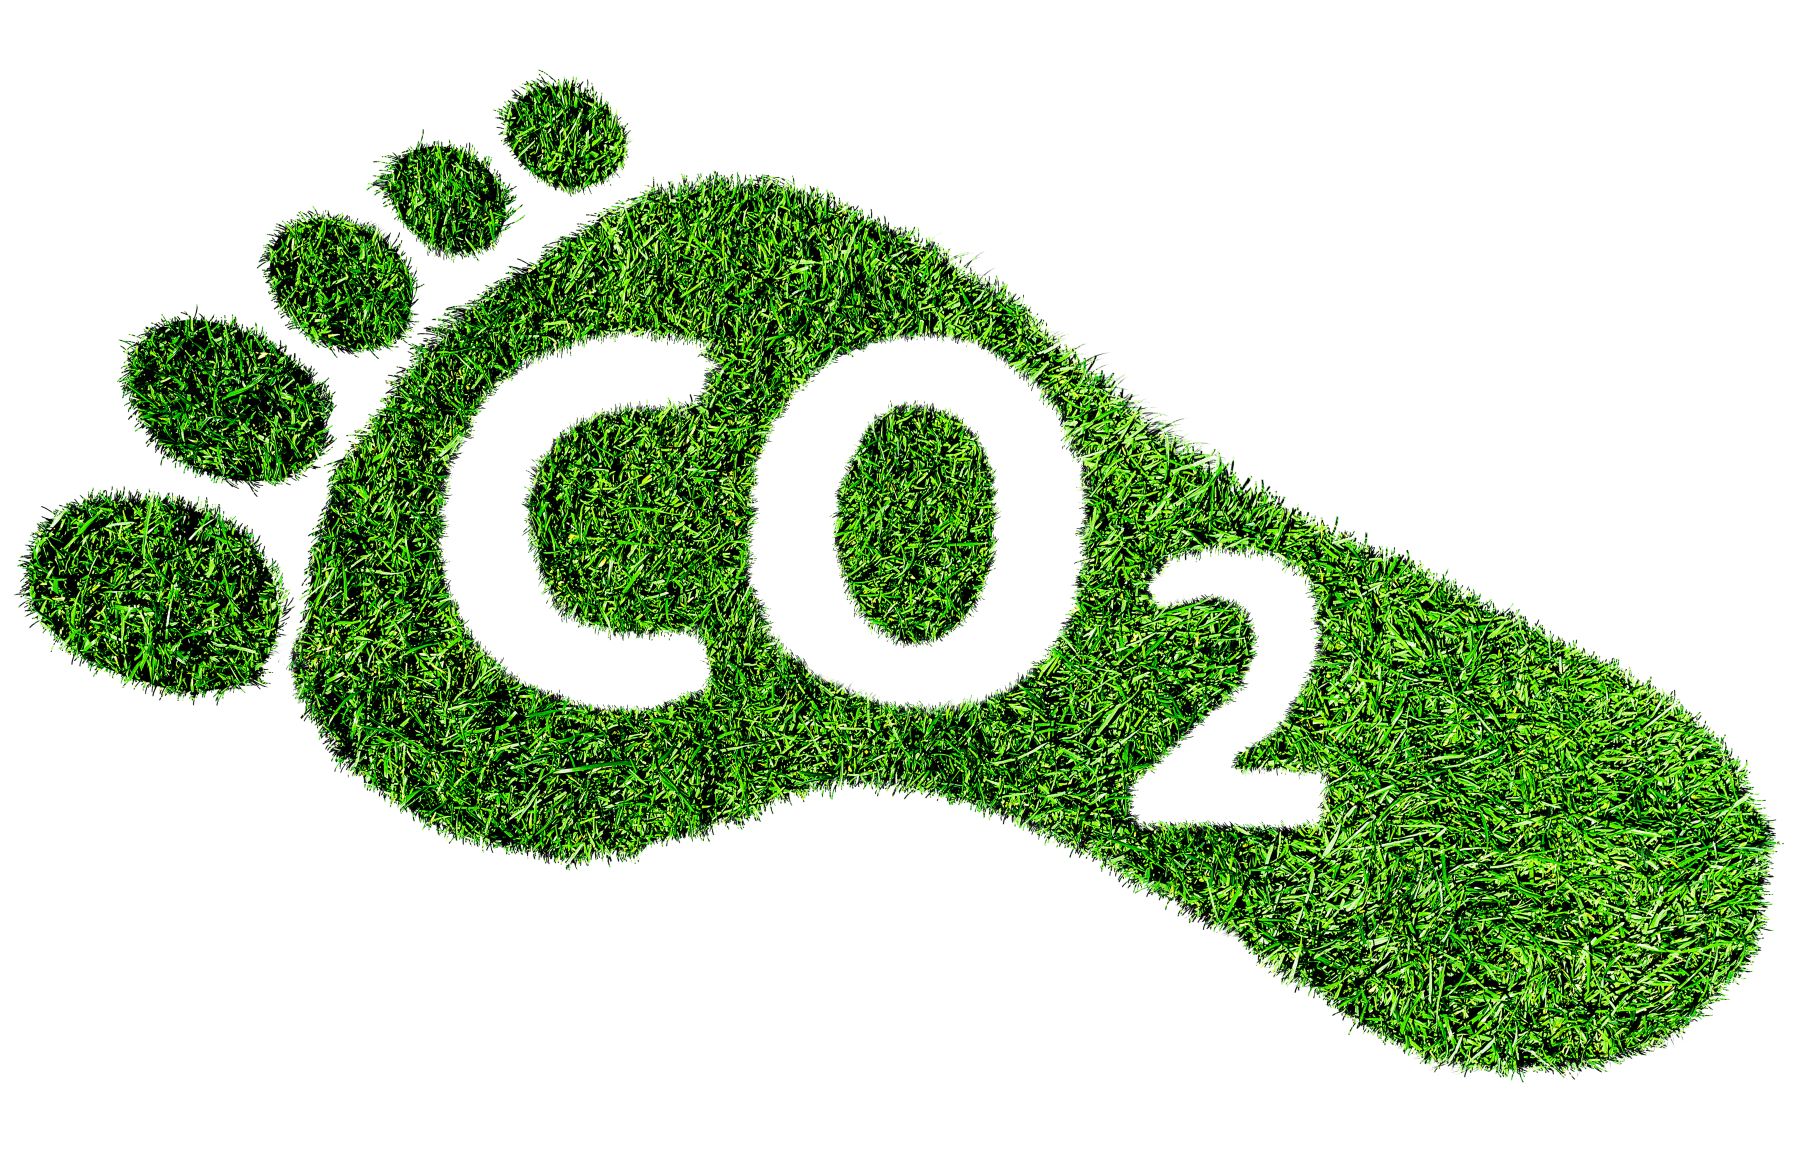 image shows Carbon Footprint